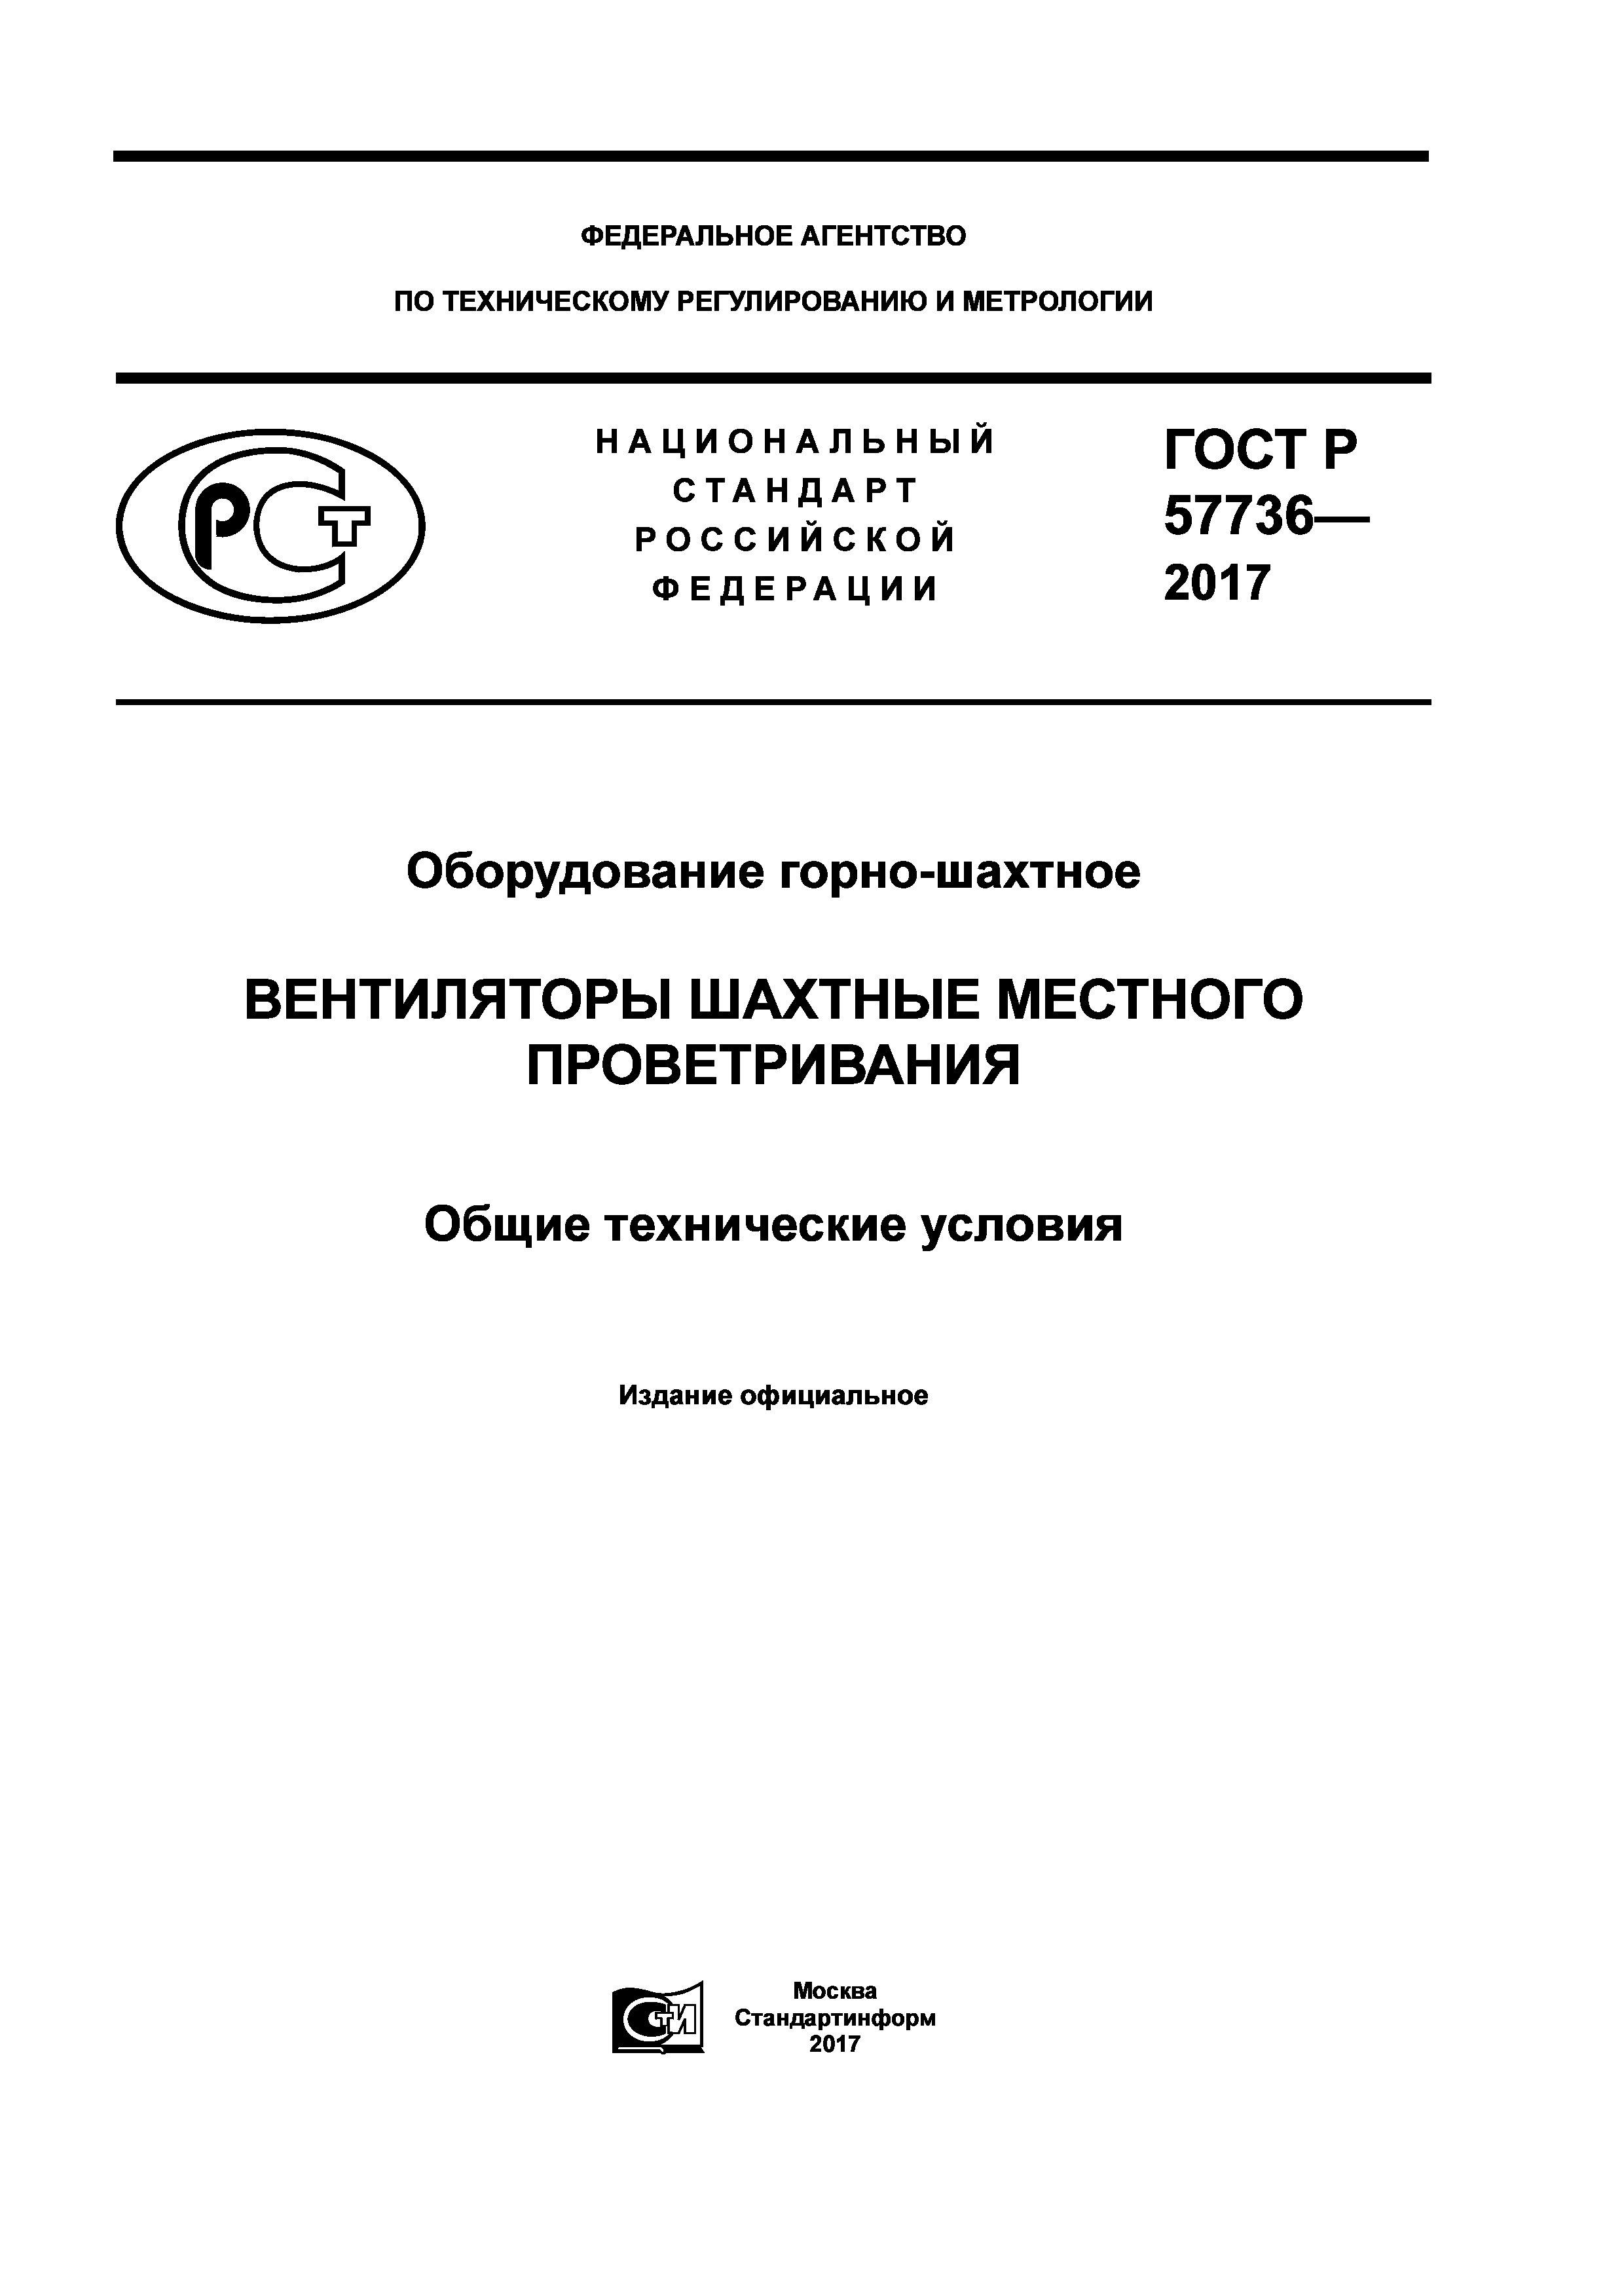 ГОСТ Р 57736-2017